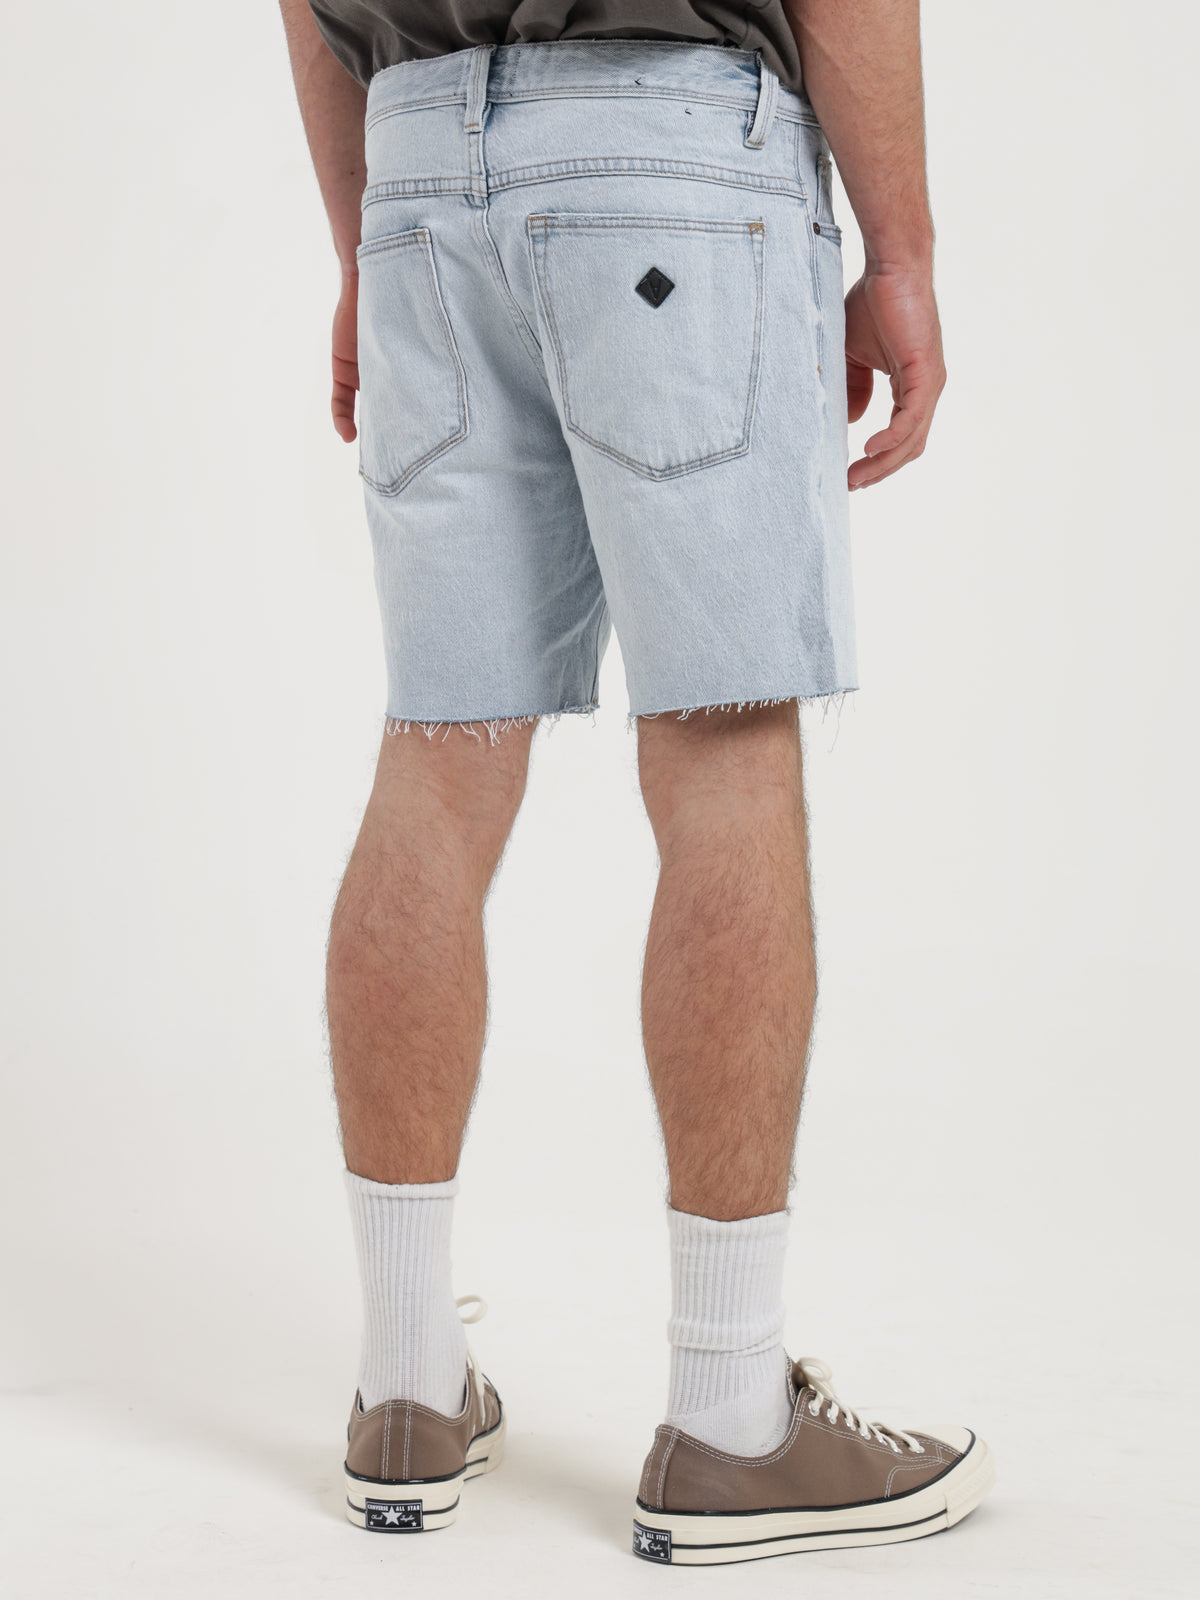 A Cropped Slim Denim Shorts in Denim